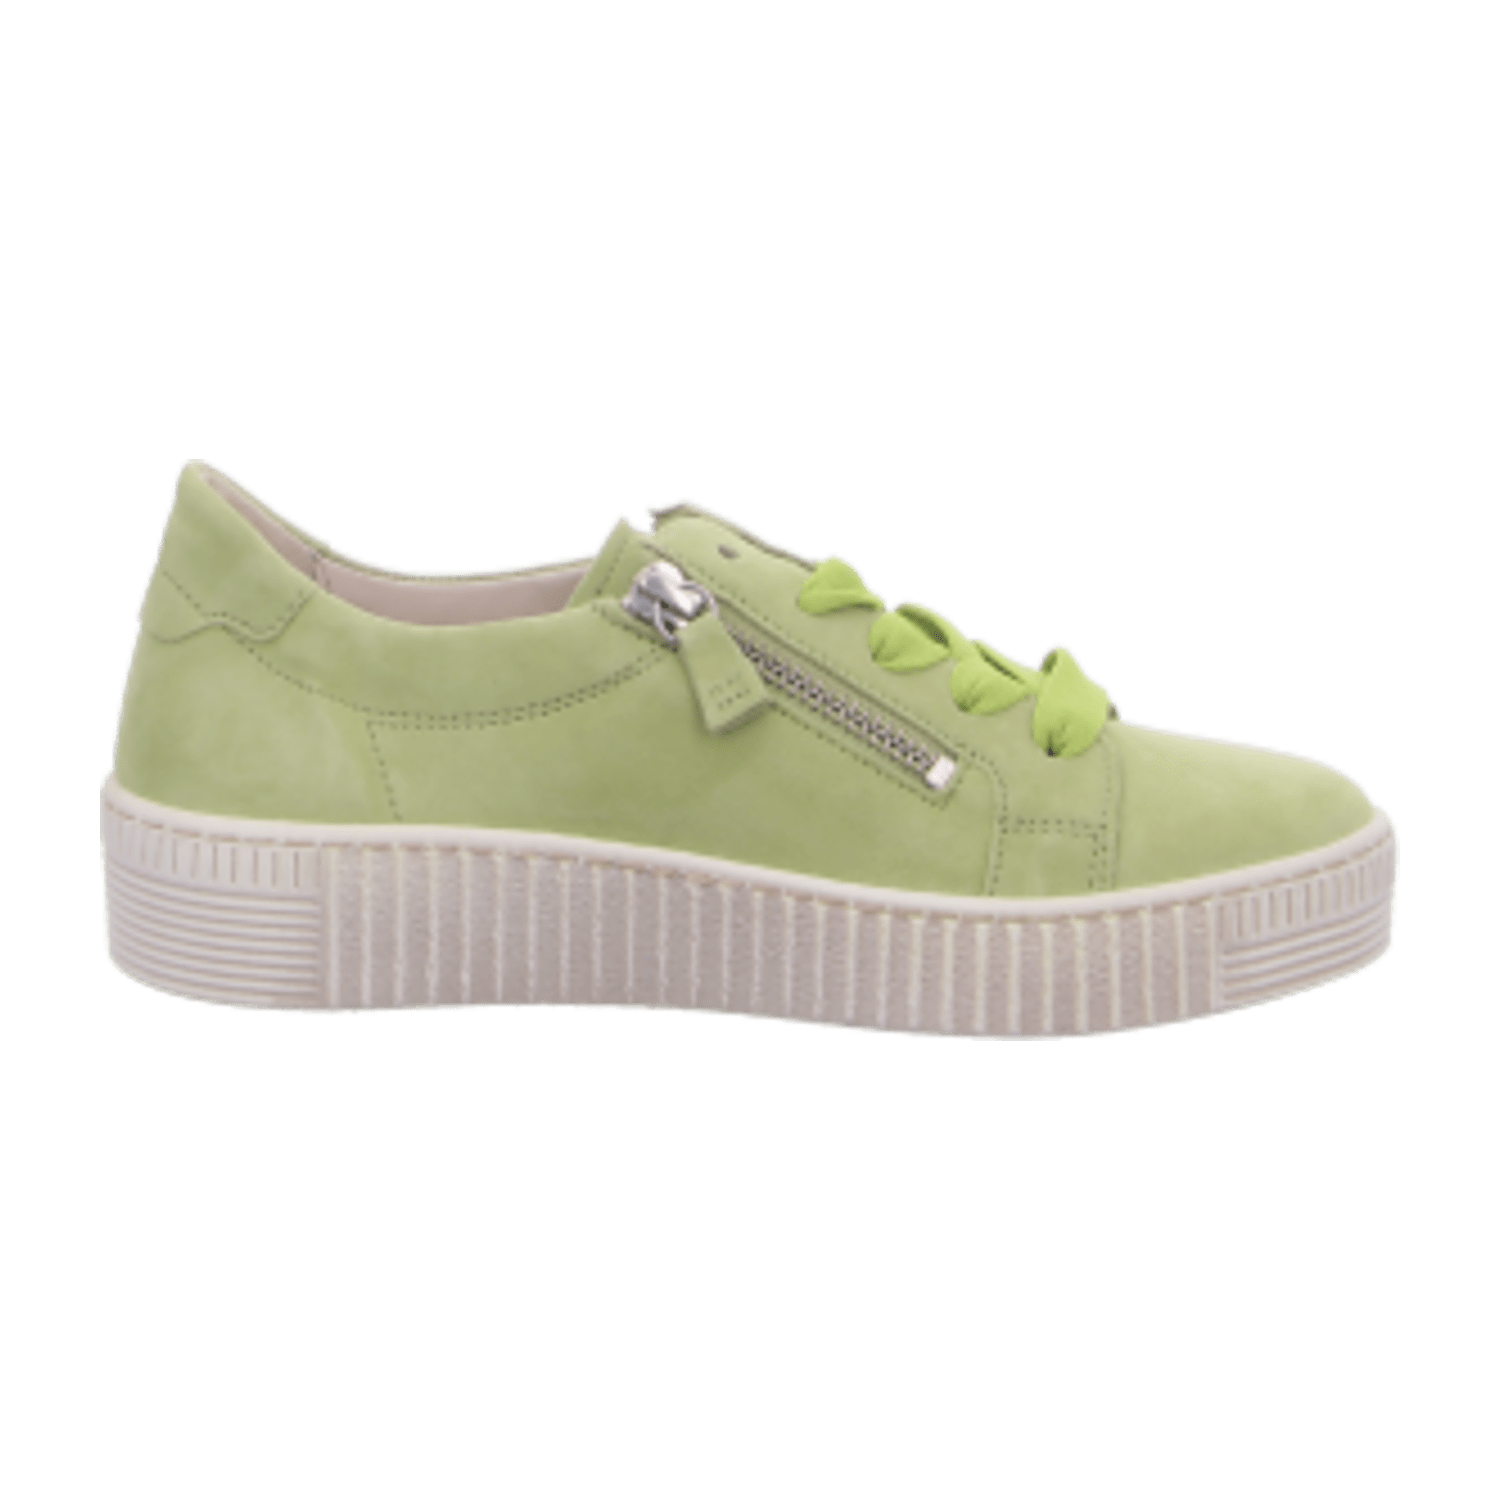 Gabor Schuhe Sneakers grün limette Samt 43.334.10